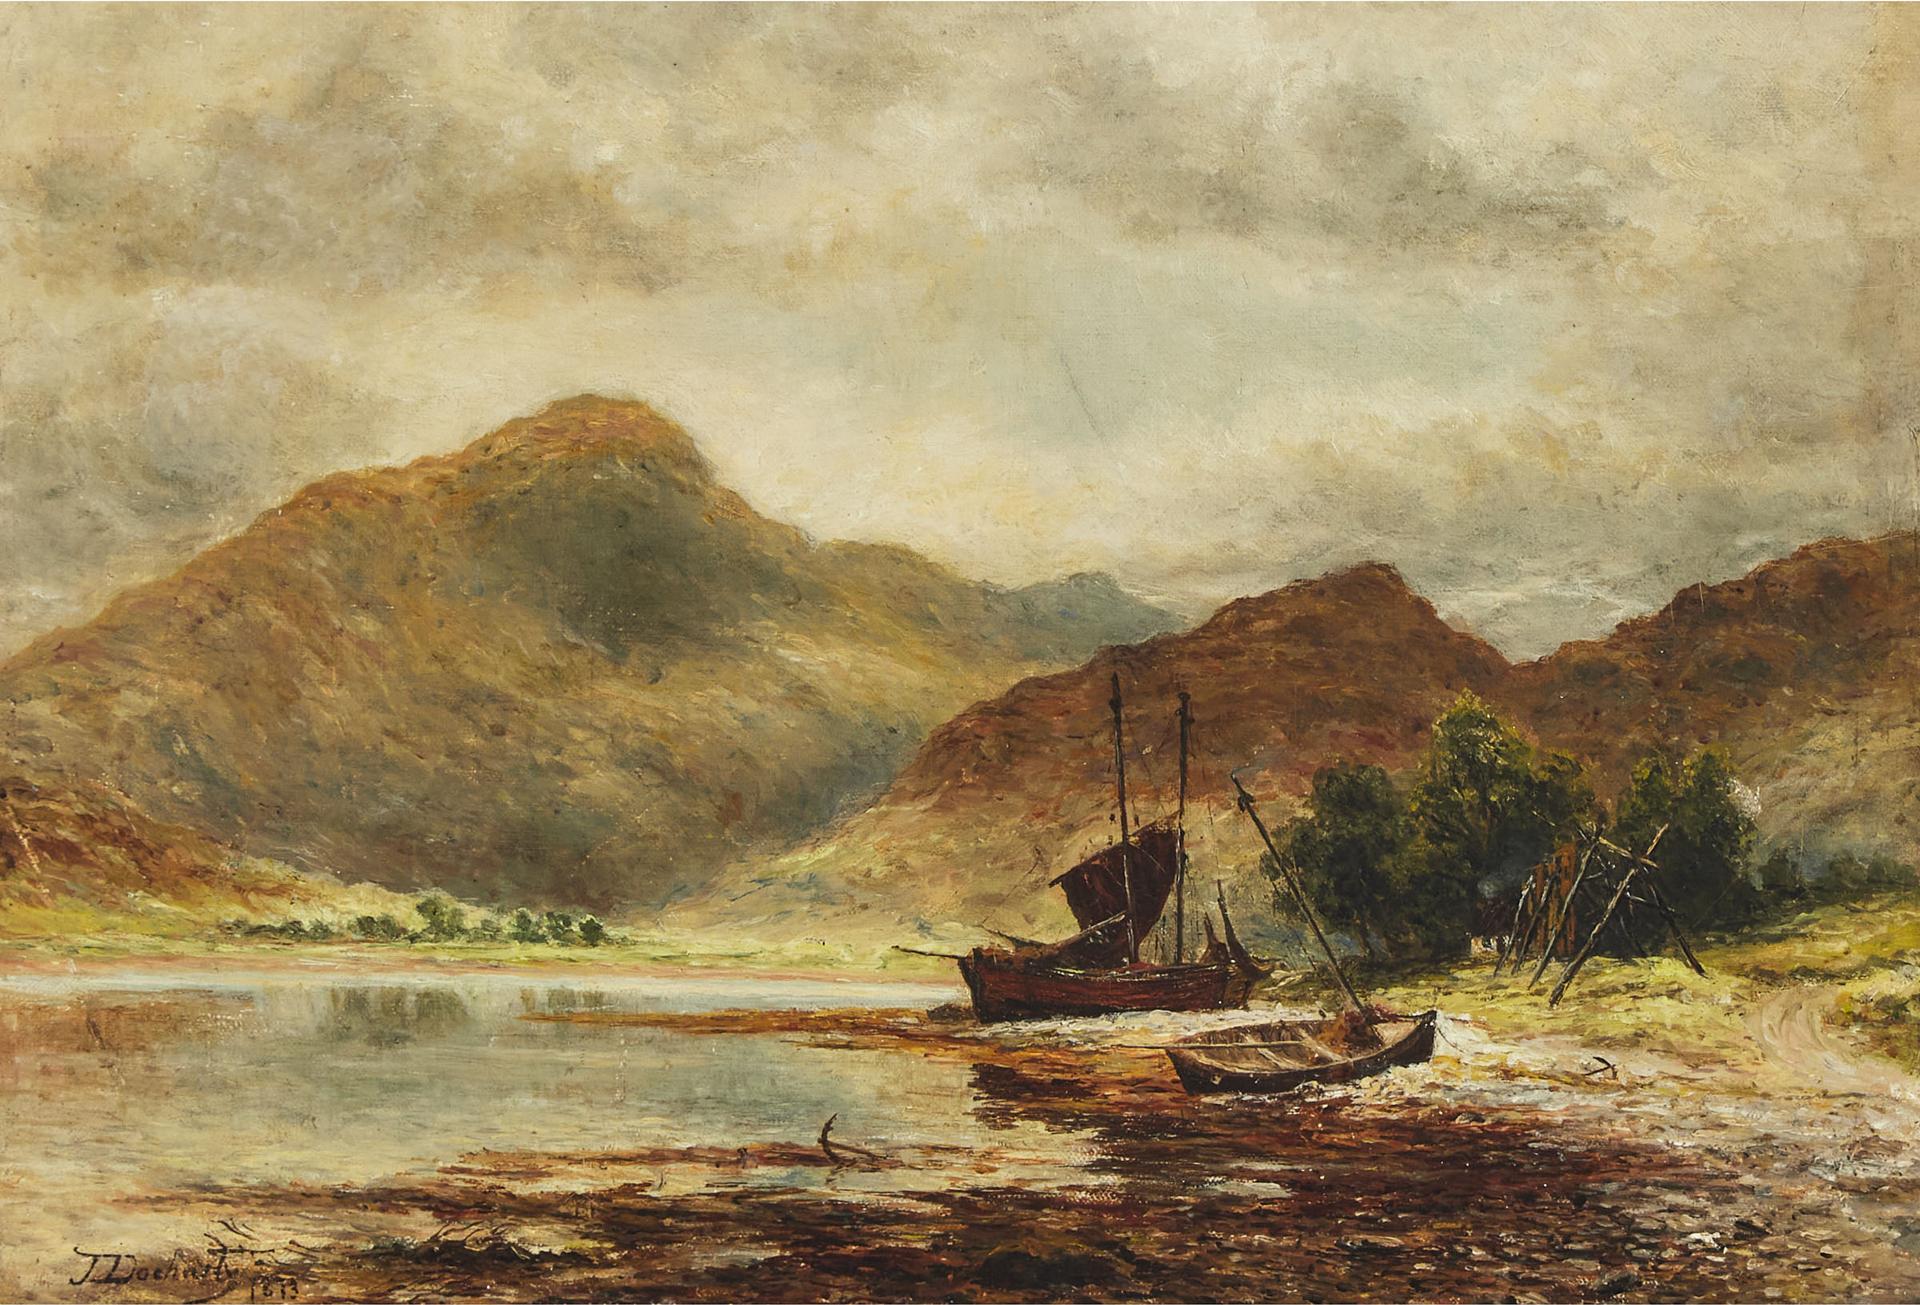 James L.C. Docharty - Fishing Boats, 1873